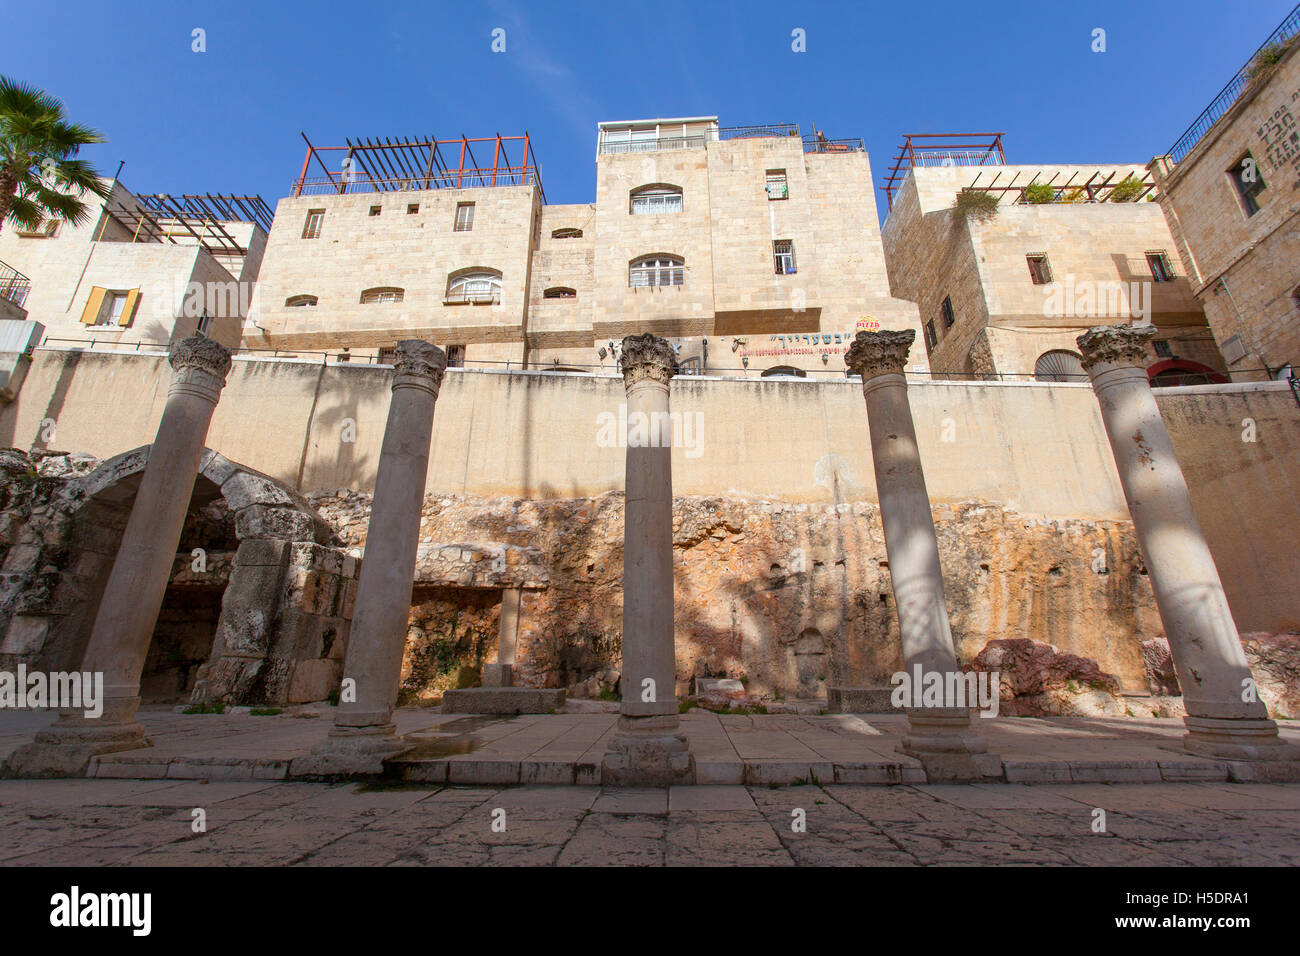 Roman columns in the 'Cardo' quarter. Jerusalem Old City, Israel. Stock Photo